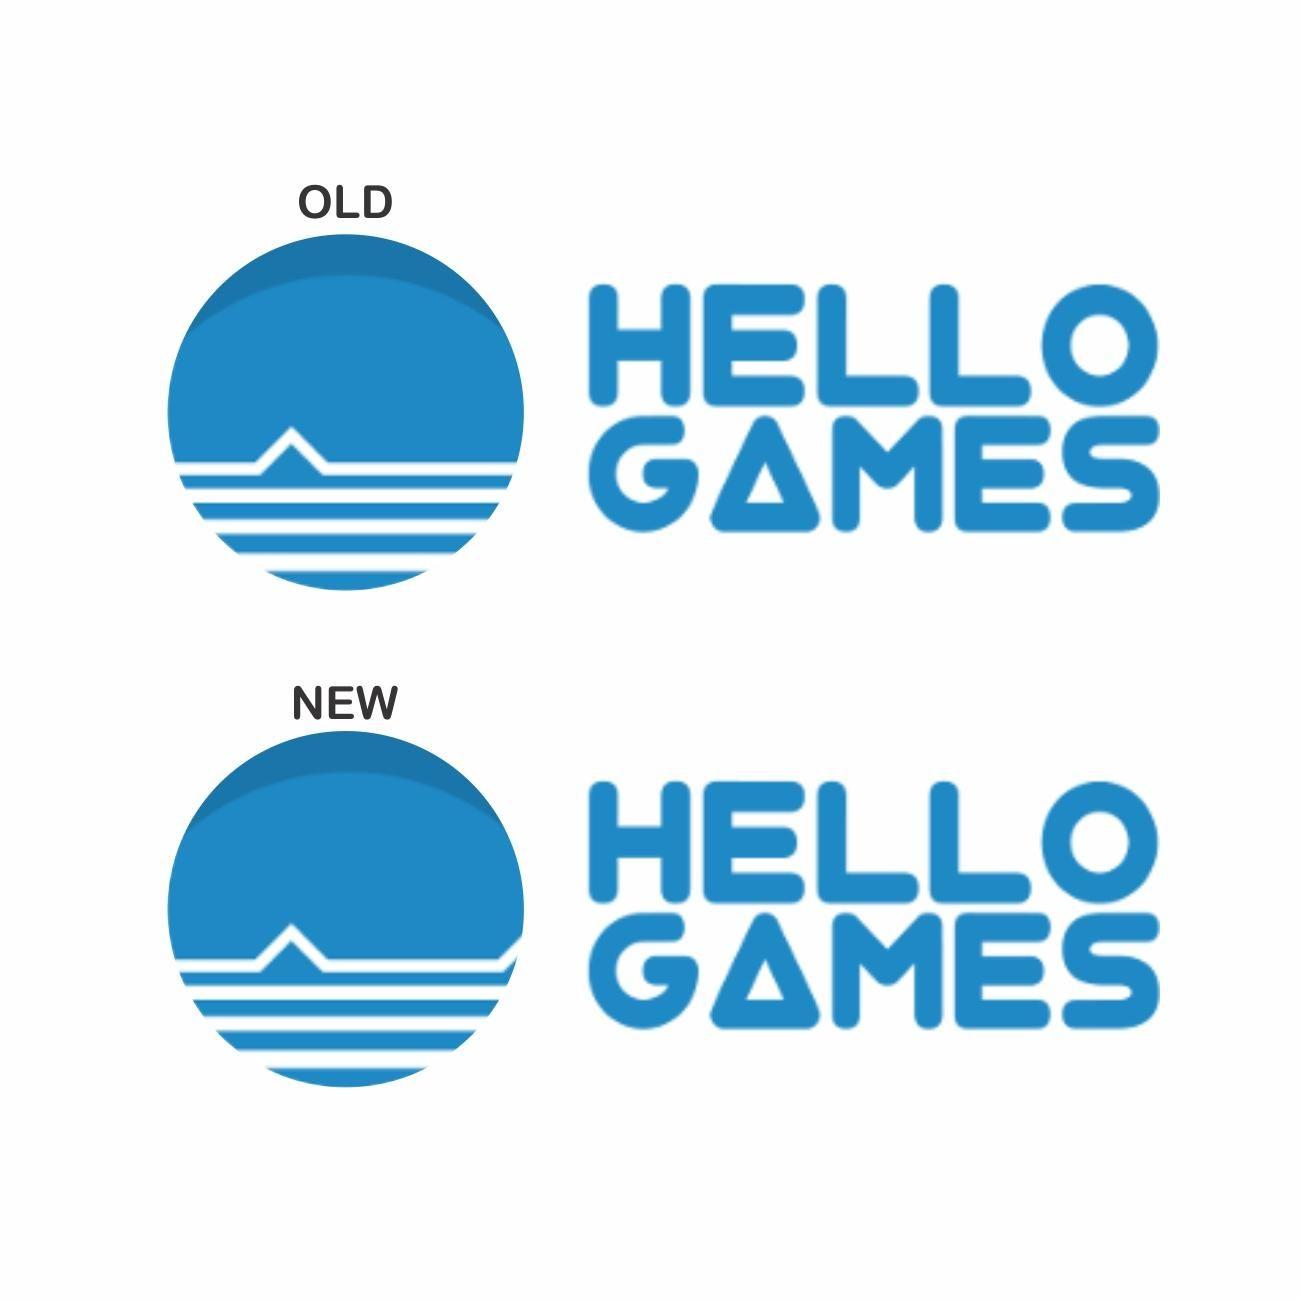 Old Games Logo - Hello Games new logo : NoMansSkyTheGame